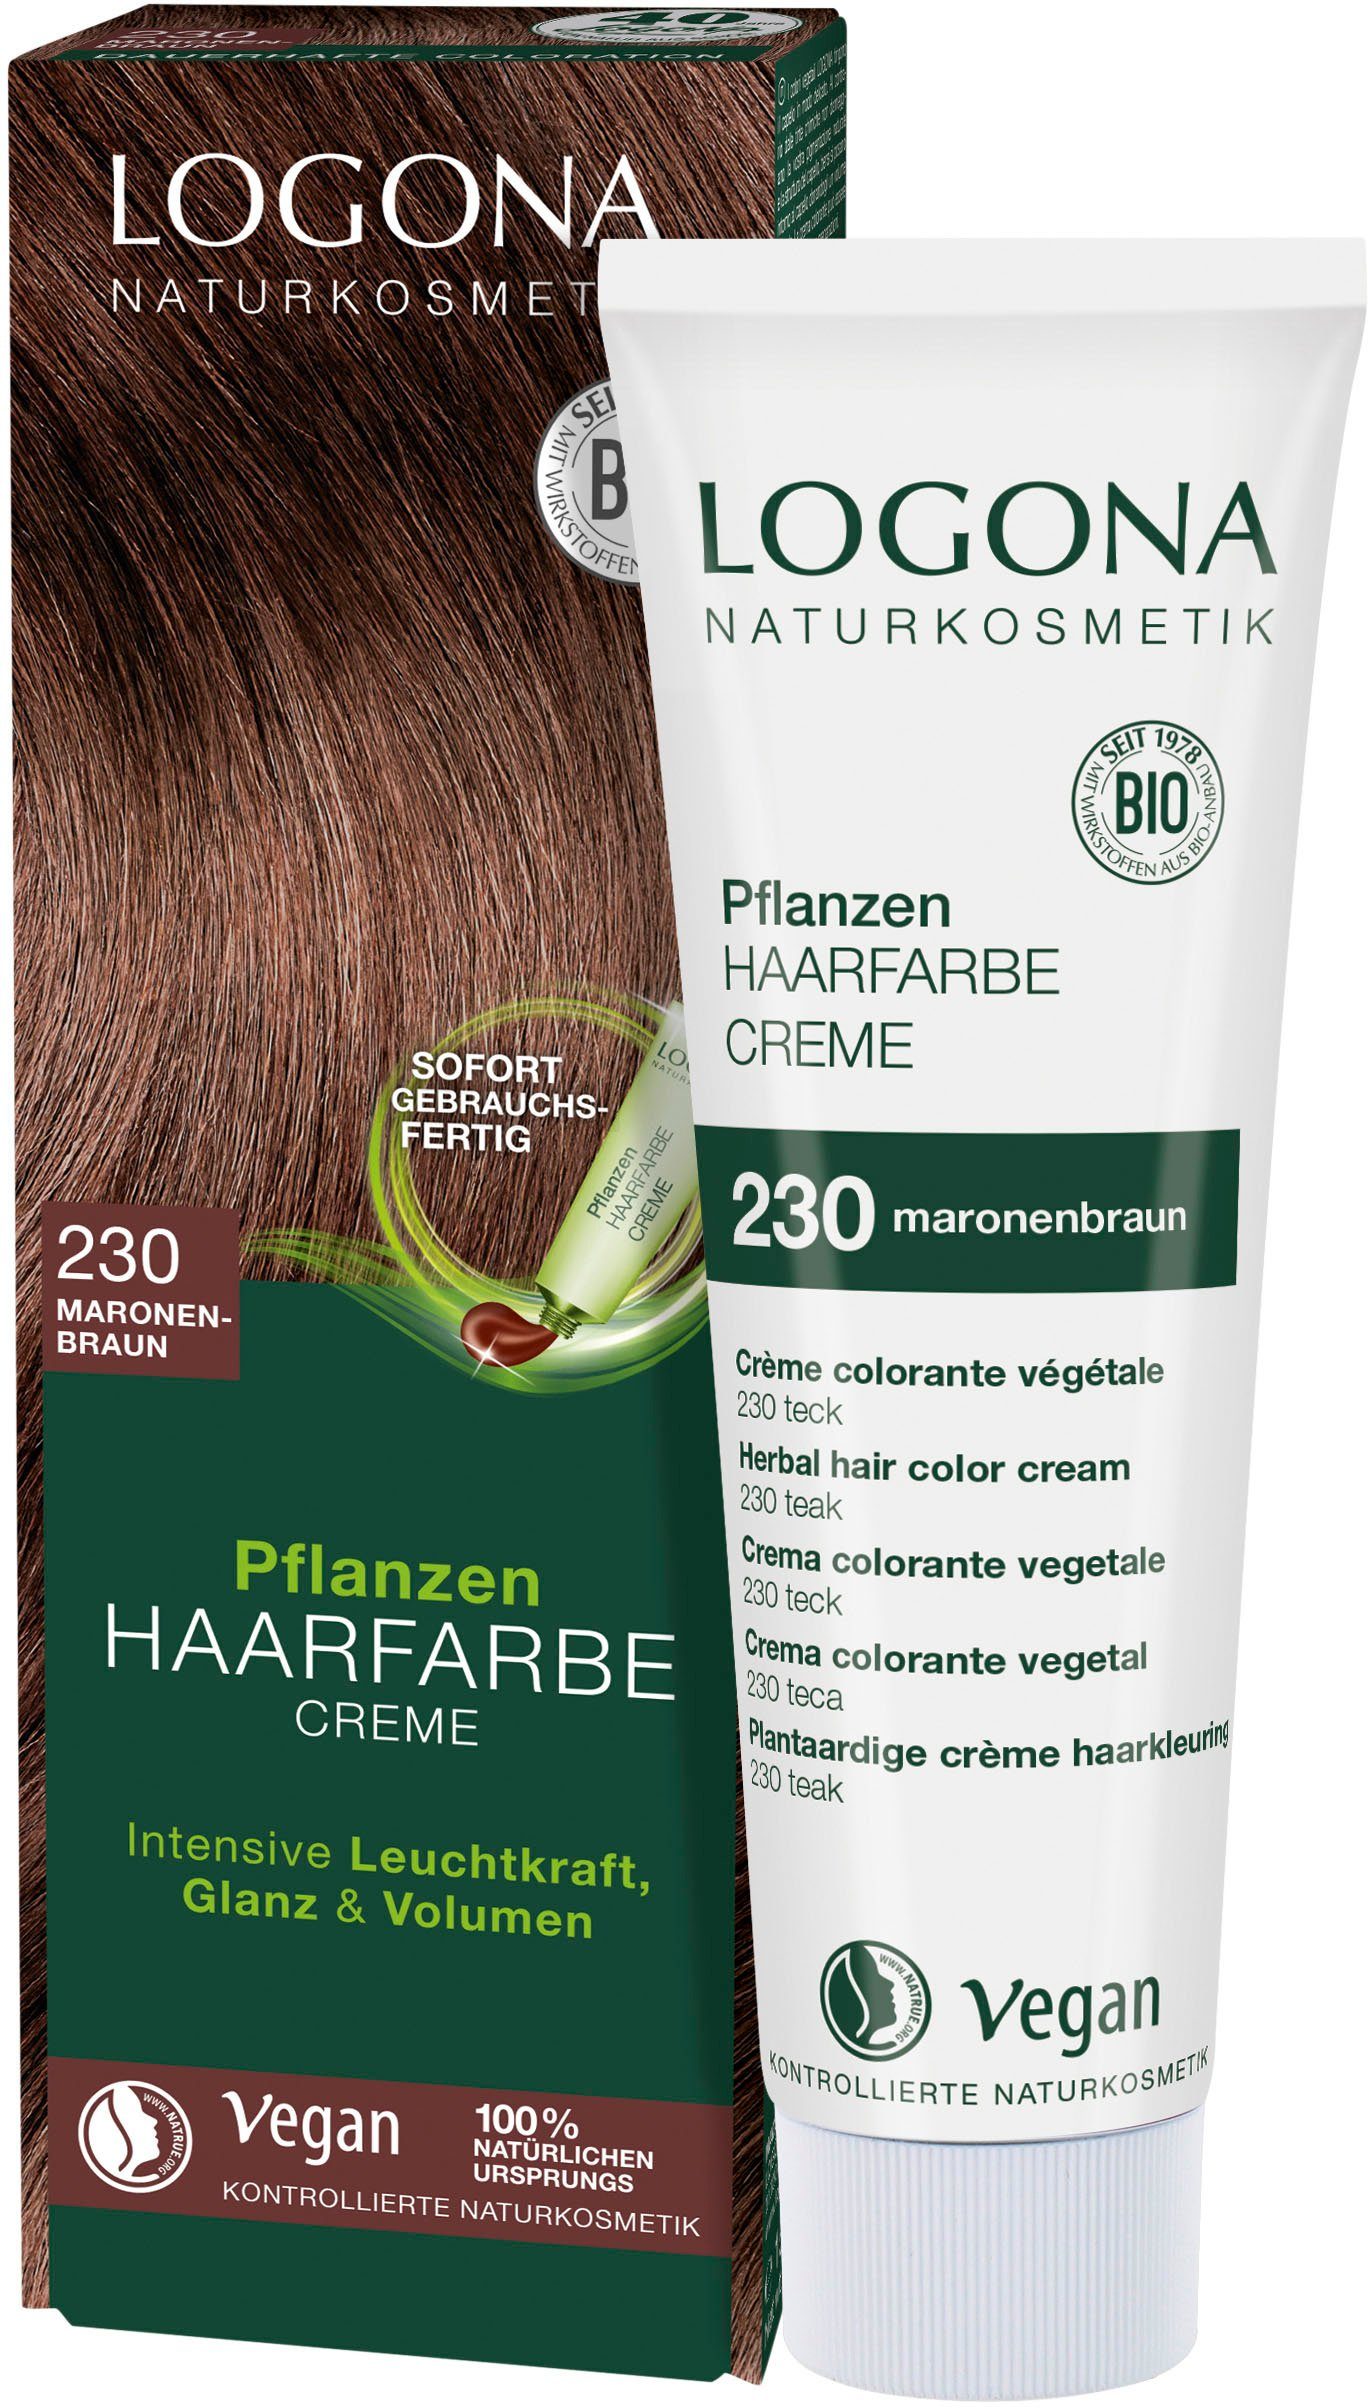 LOGONA Haarfarbe Logona 230 maronenbraun Creme Pflanzen-Haarfarbe